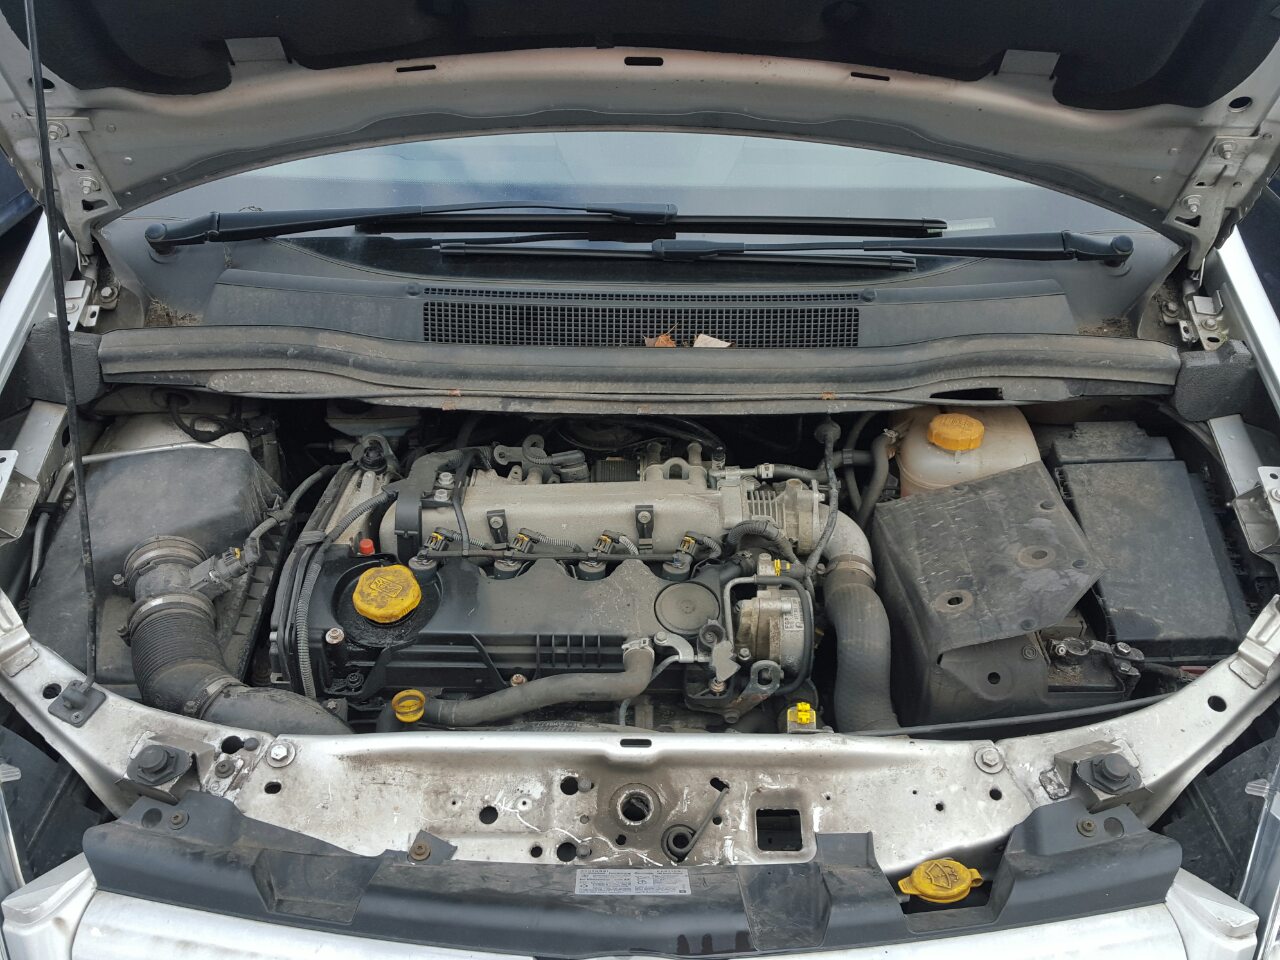 Opel zafira b двигатель. Открытый капот Опель Зафира а 1,6. Открытый капот Опель Зафира б. Опель Зафира под капотом. Капот Opel Zafira c.